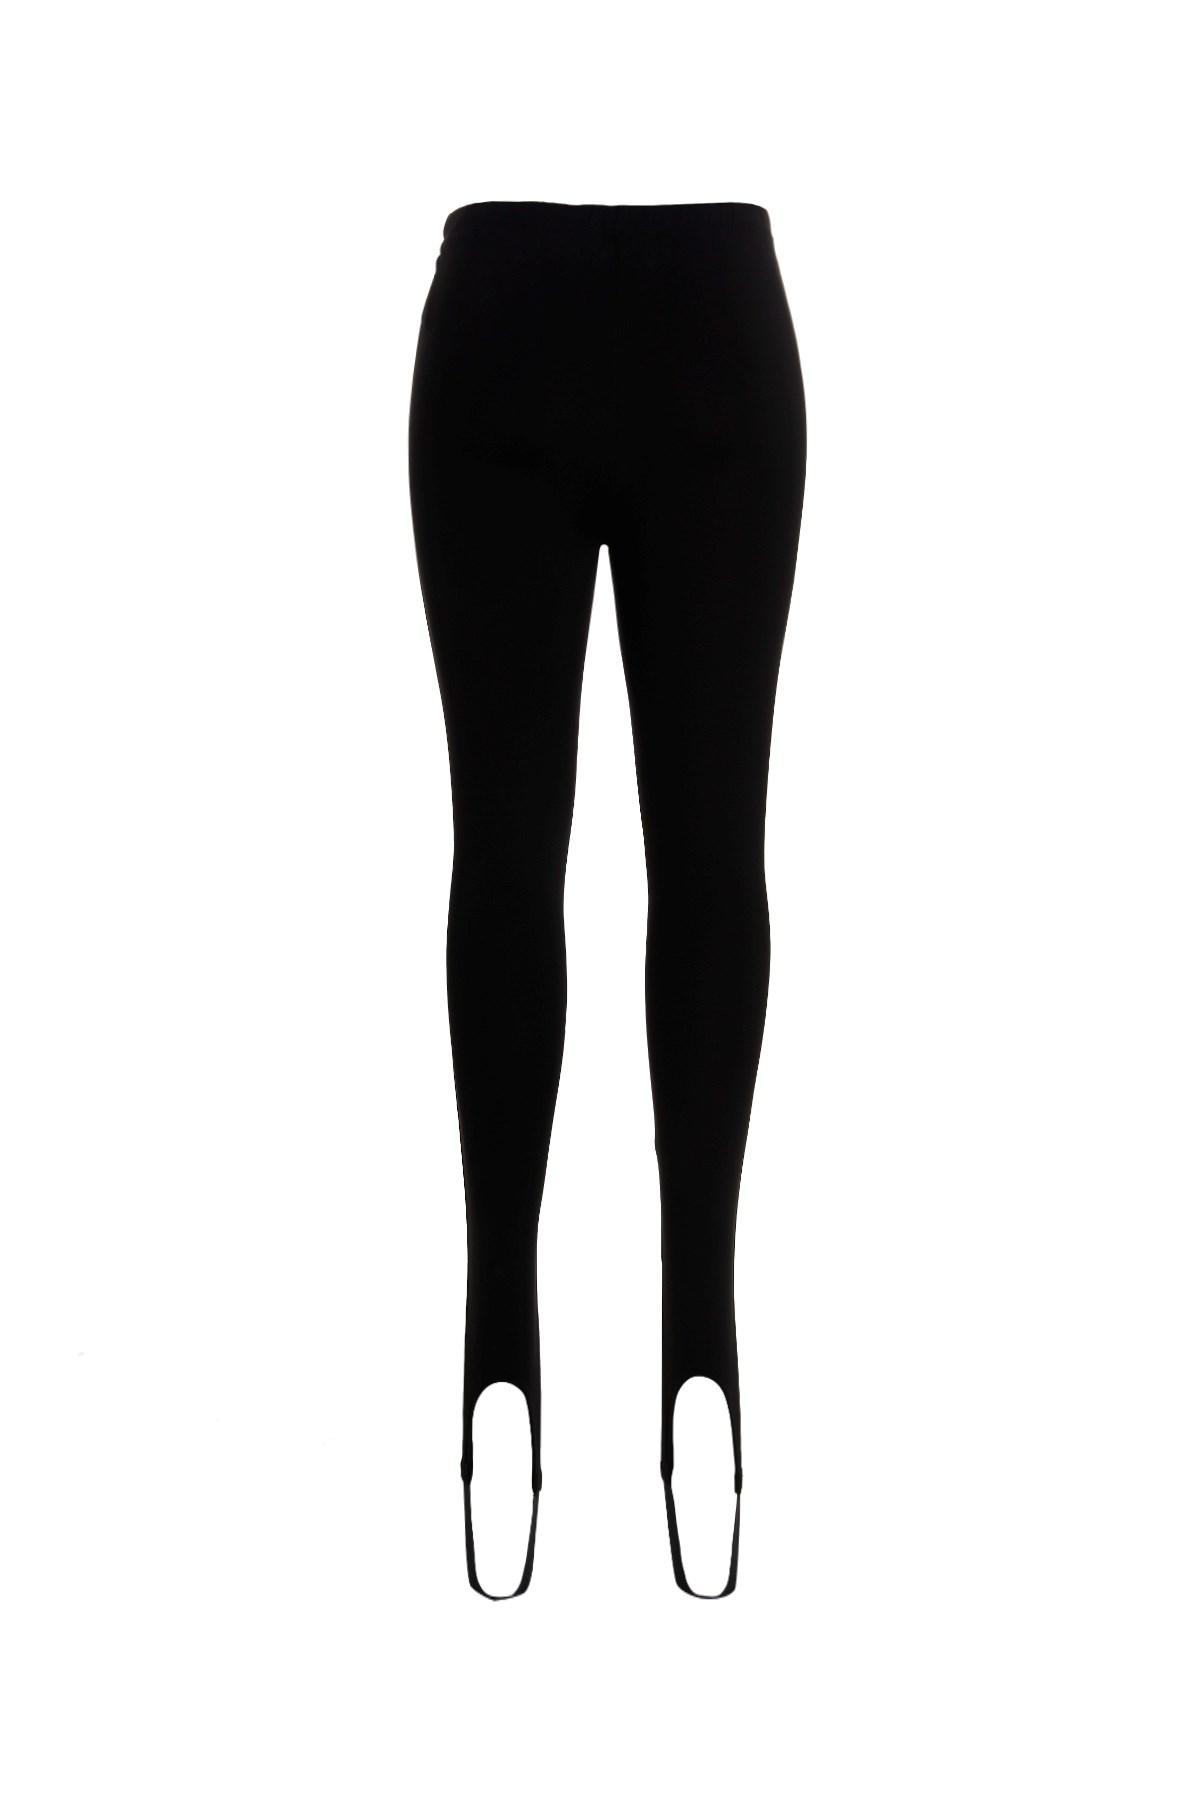 Wardrobe NYC 'stirrup' Leggings in Black | Lyst UK